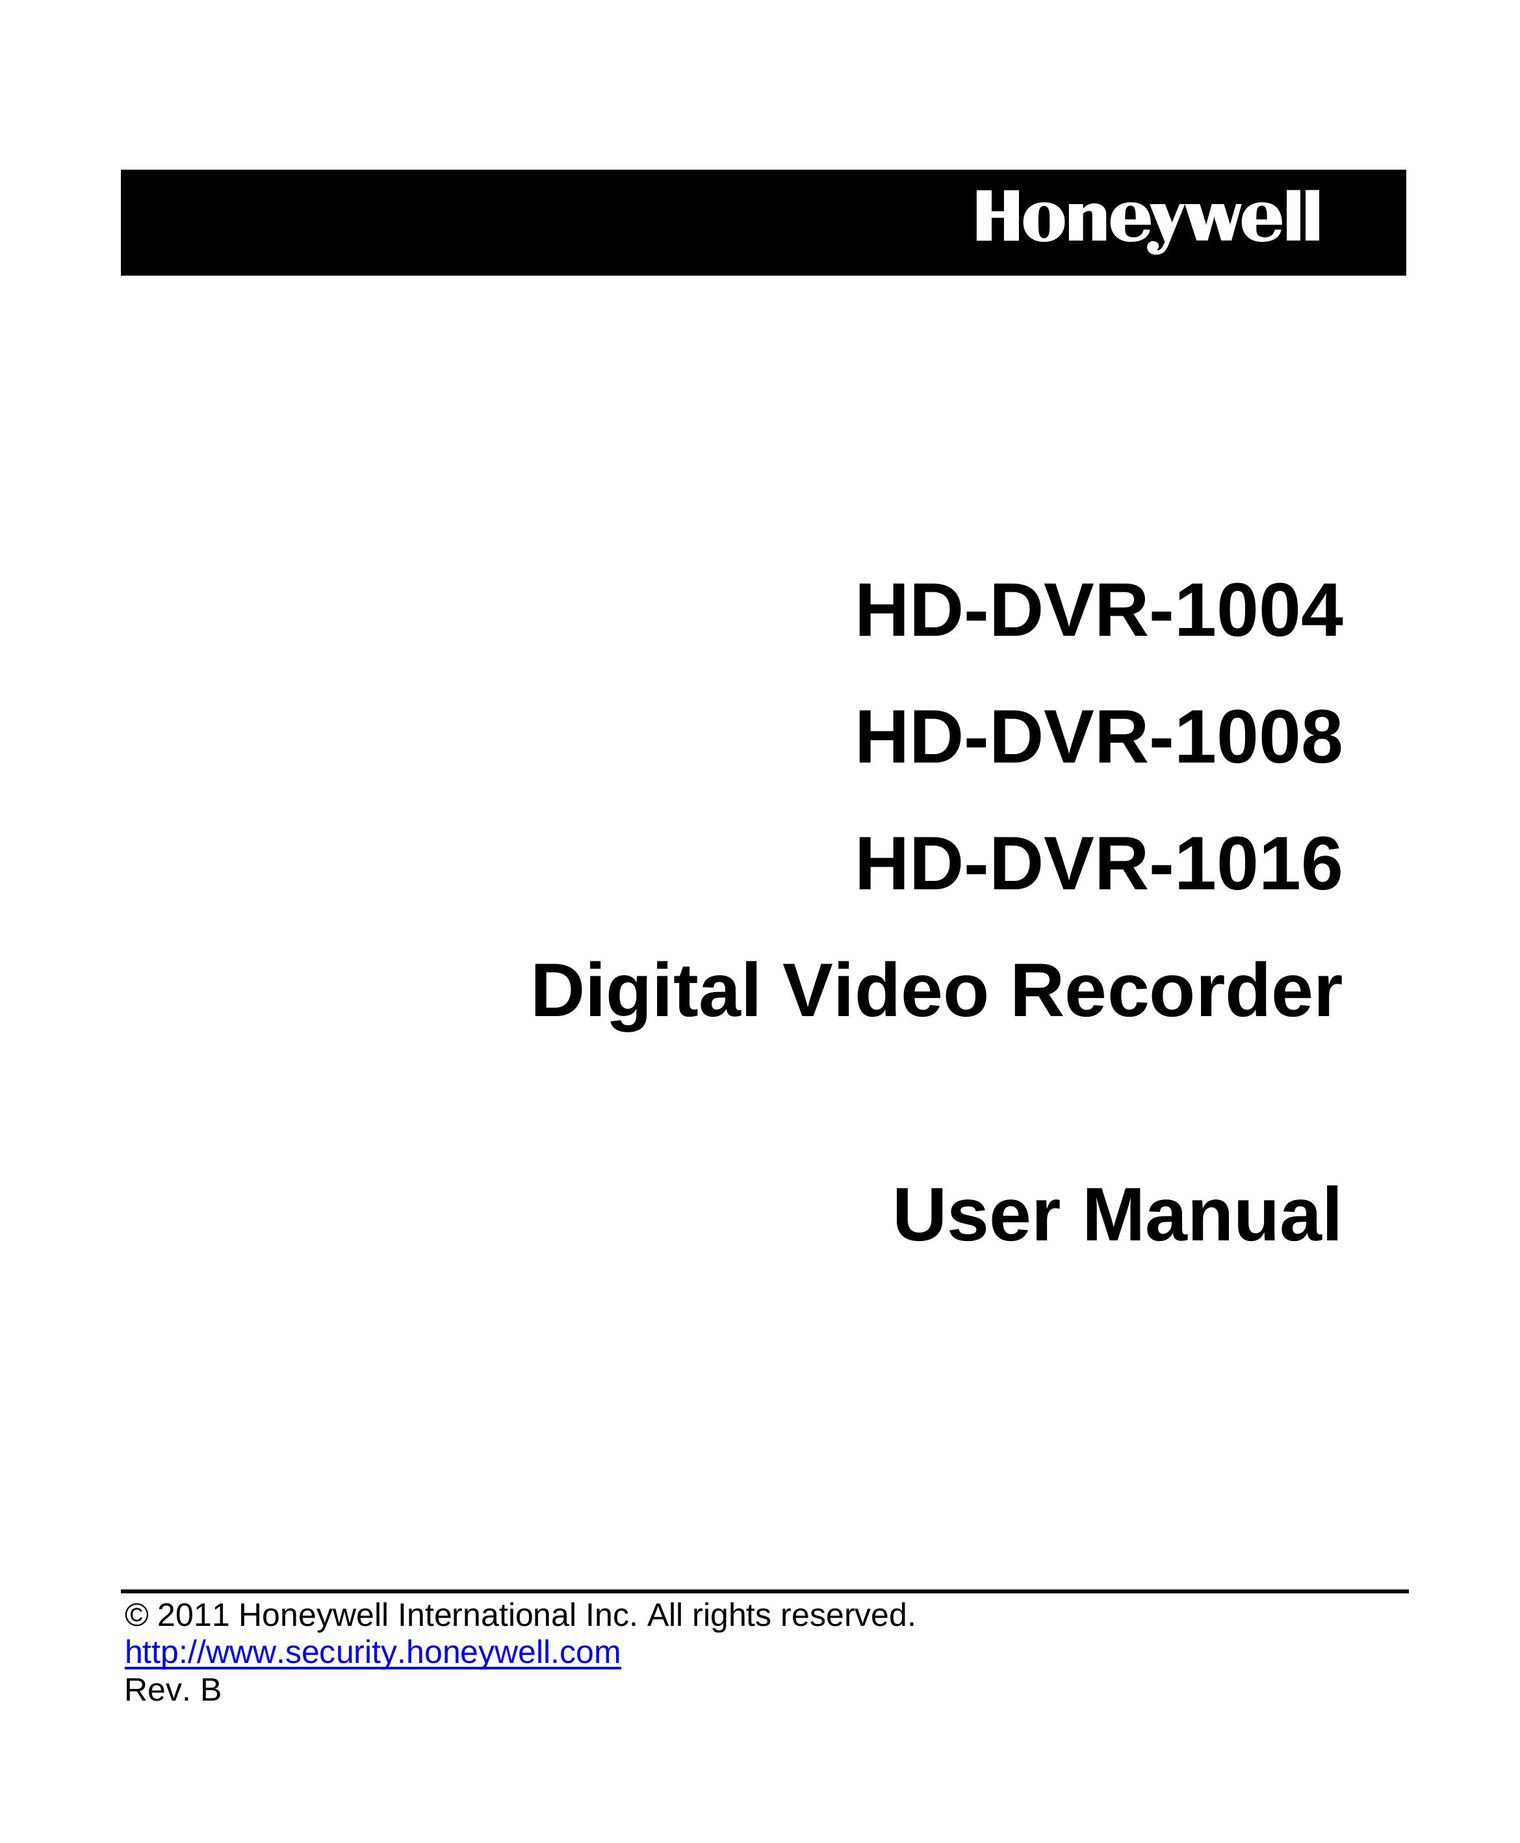 Honeywell HD-DVR-1016 DVR User Manual